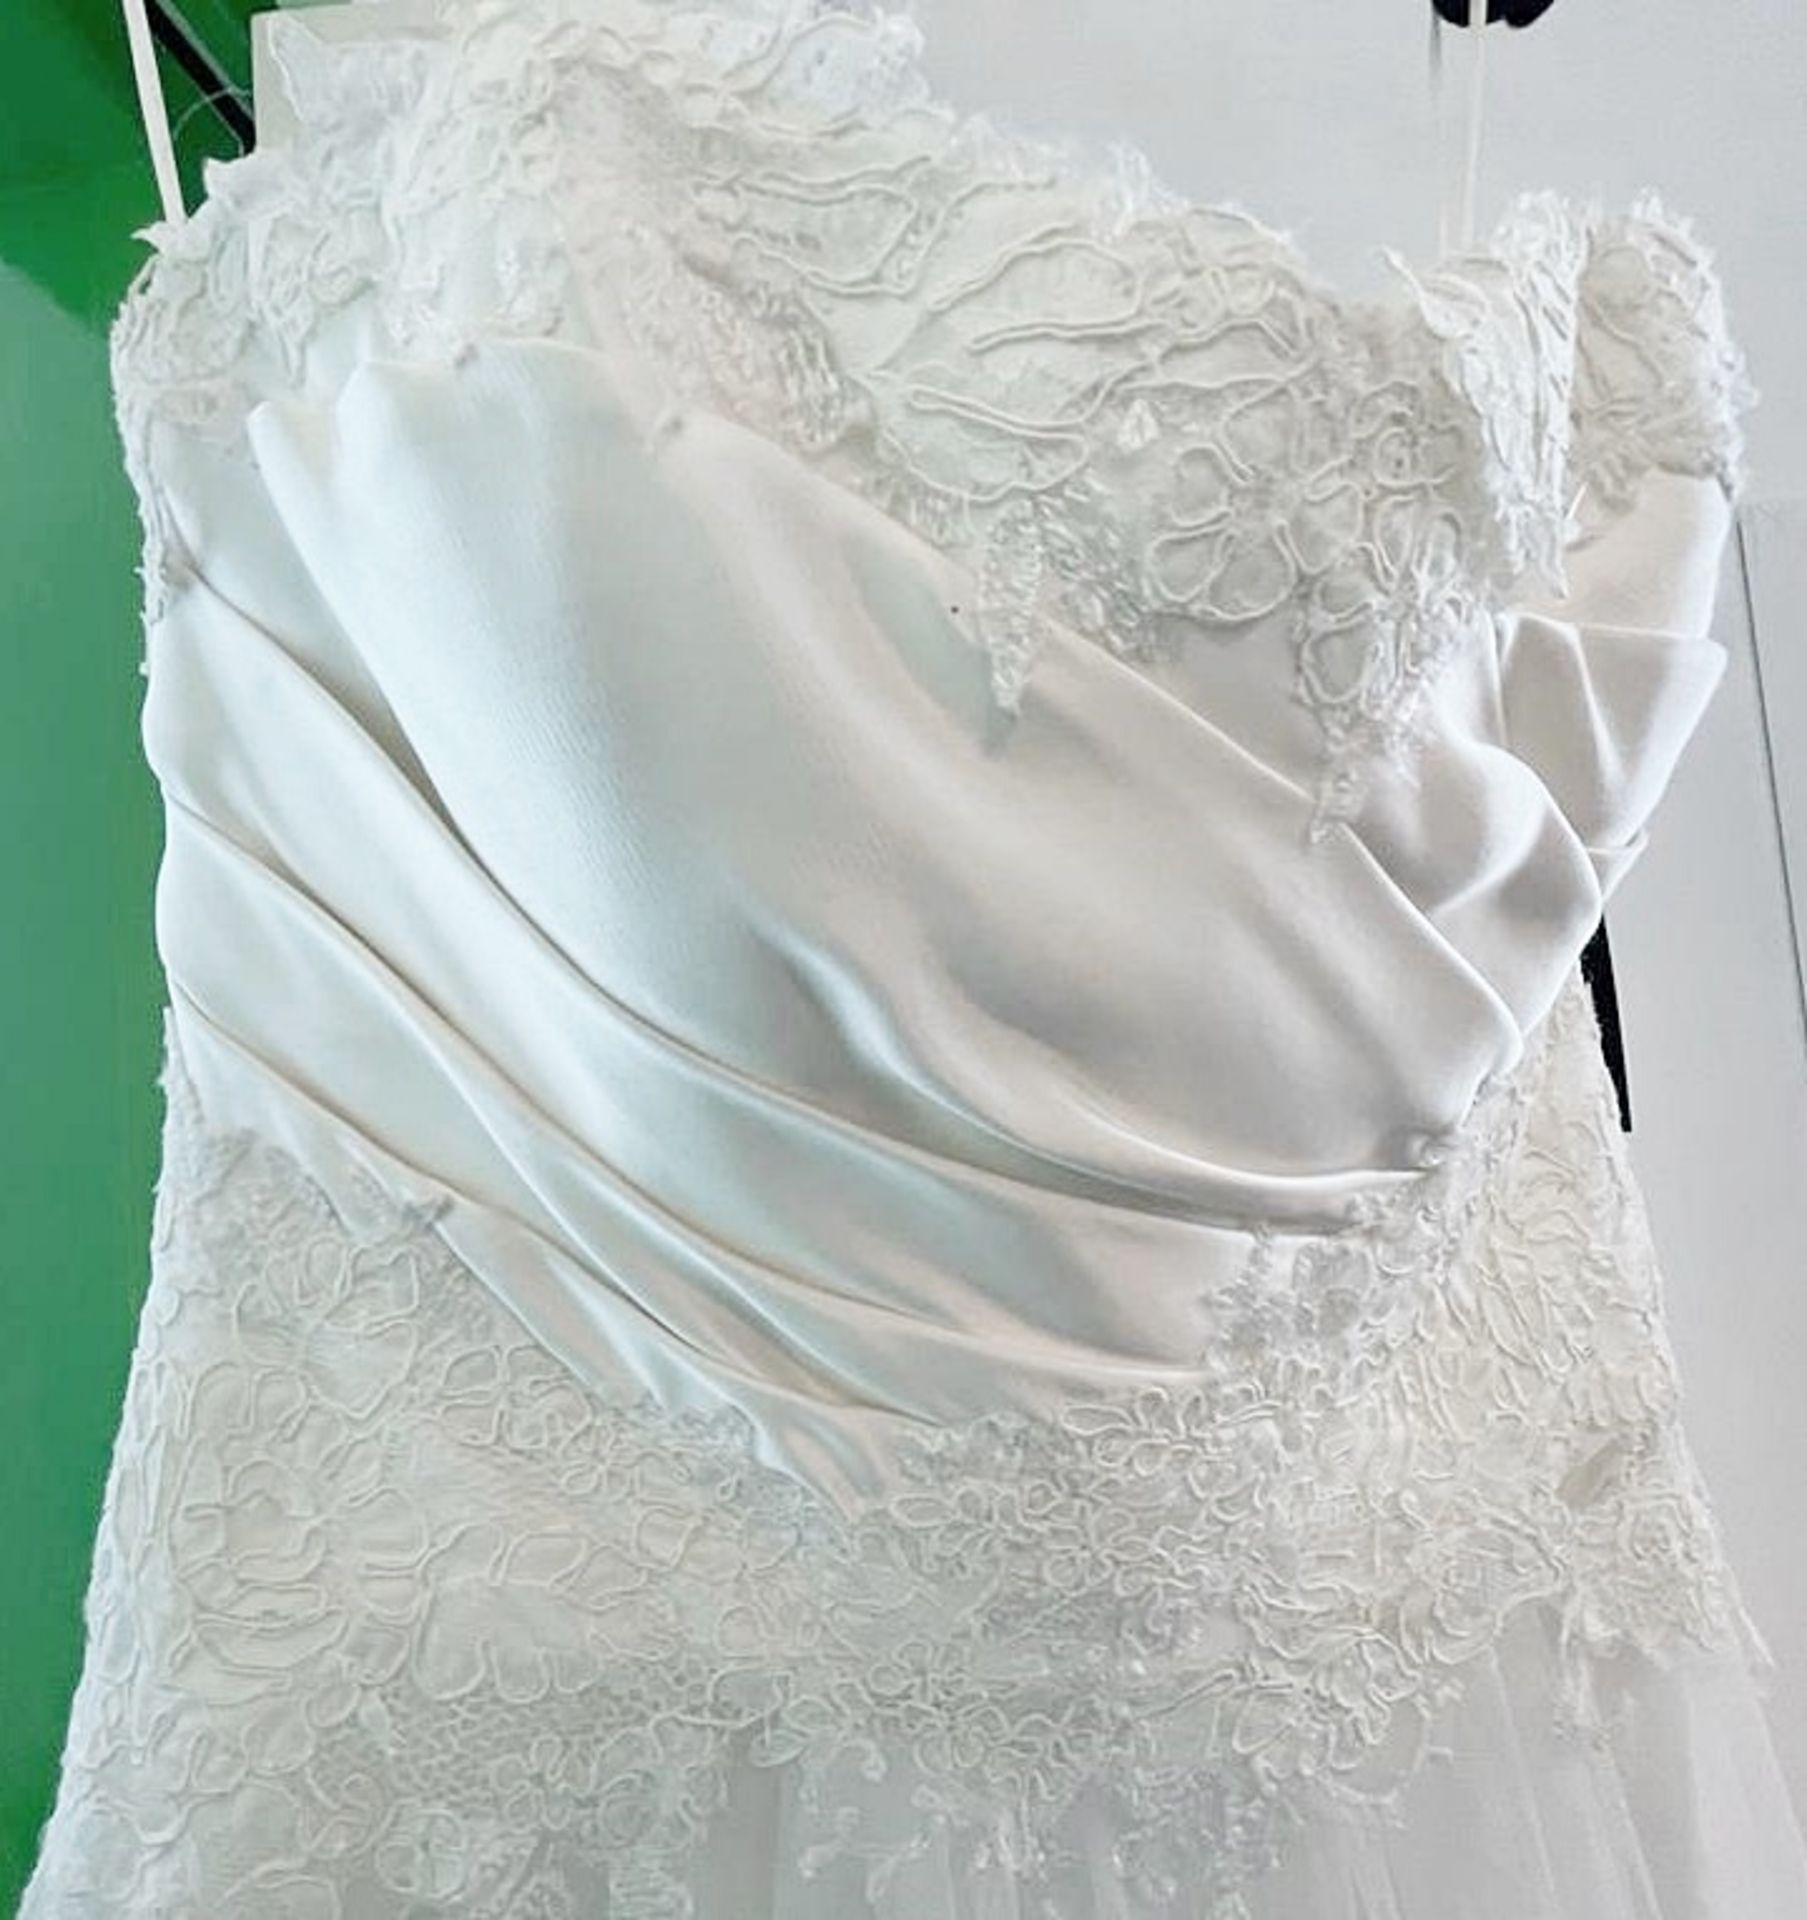 1 x LUSAN MANDONGUS / ANNASUL Y 'Infinity' Strapless Designer Wedding Dress - UK 12 - RRP £1,700 - Image 3 of 8